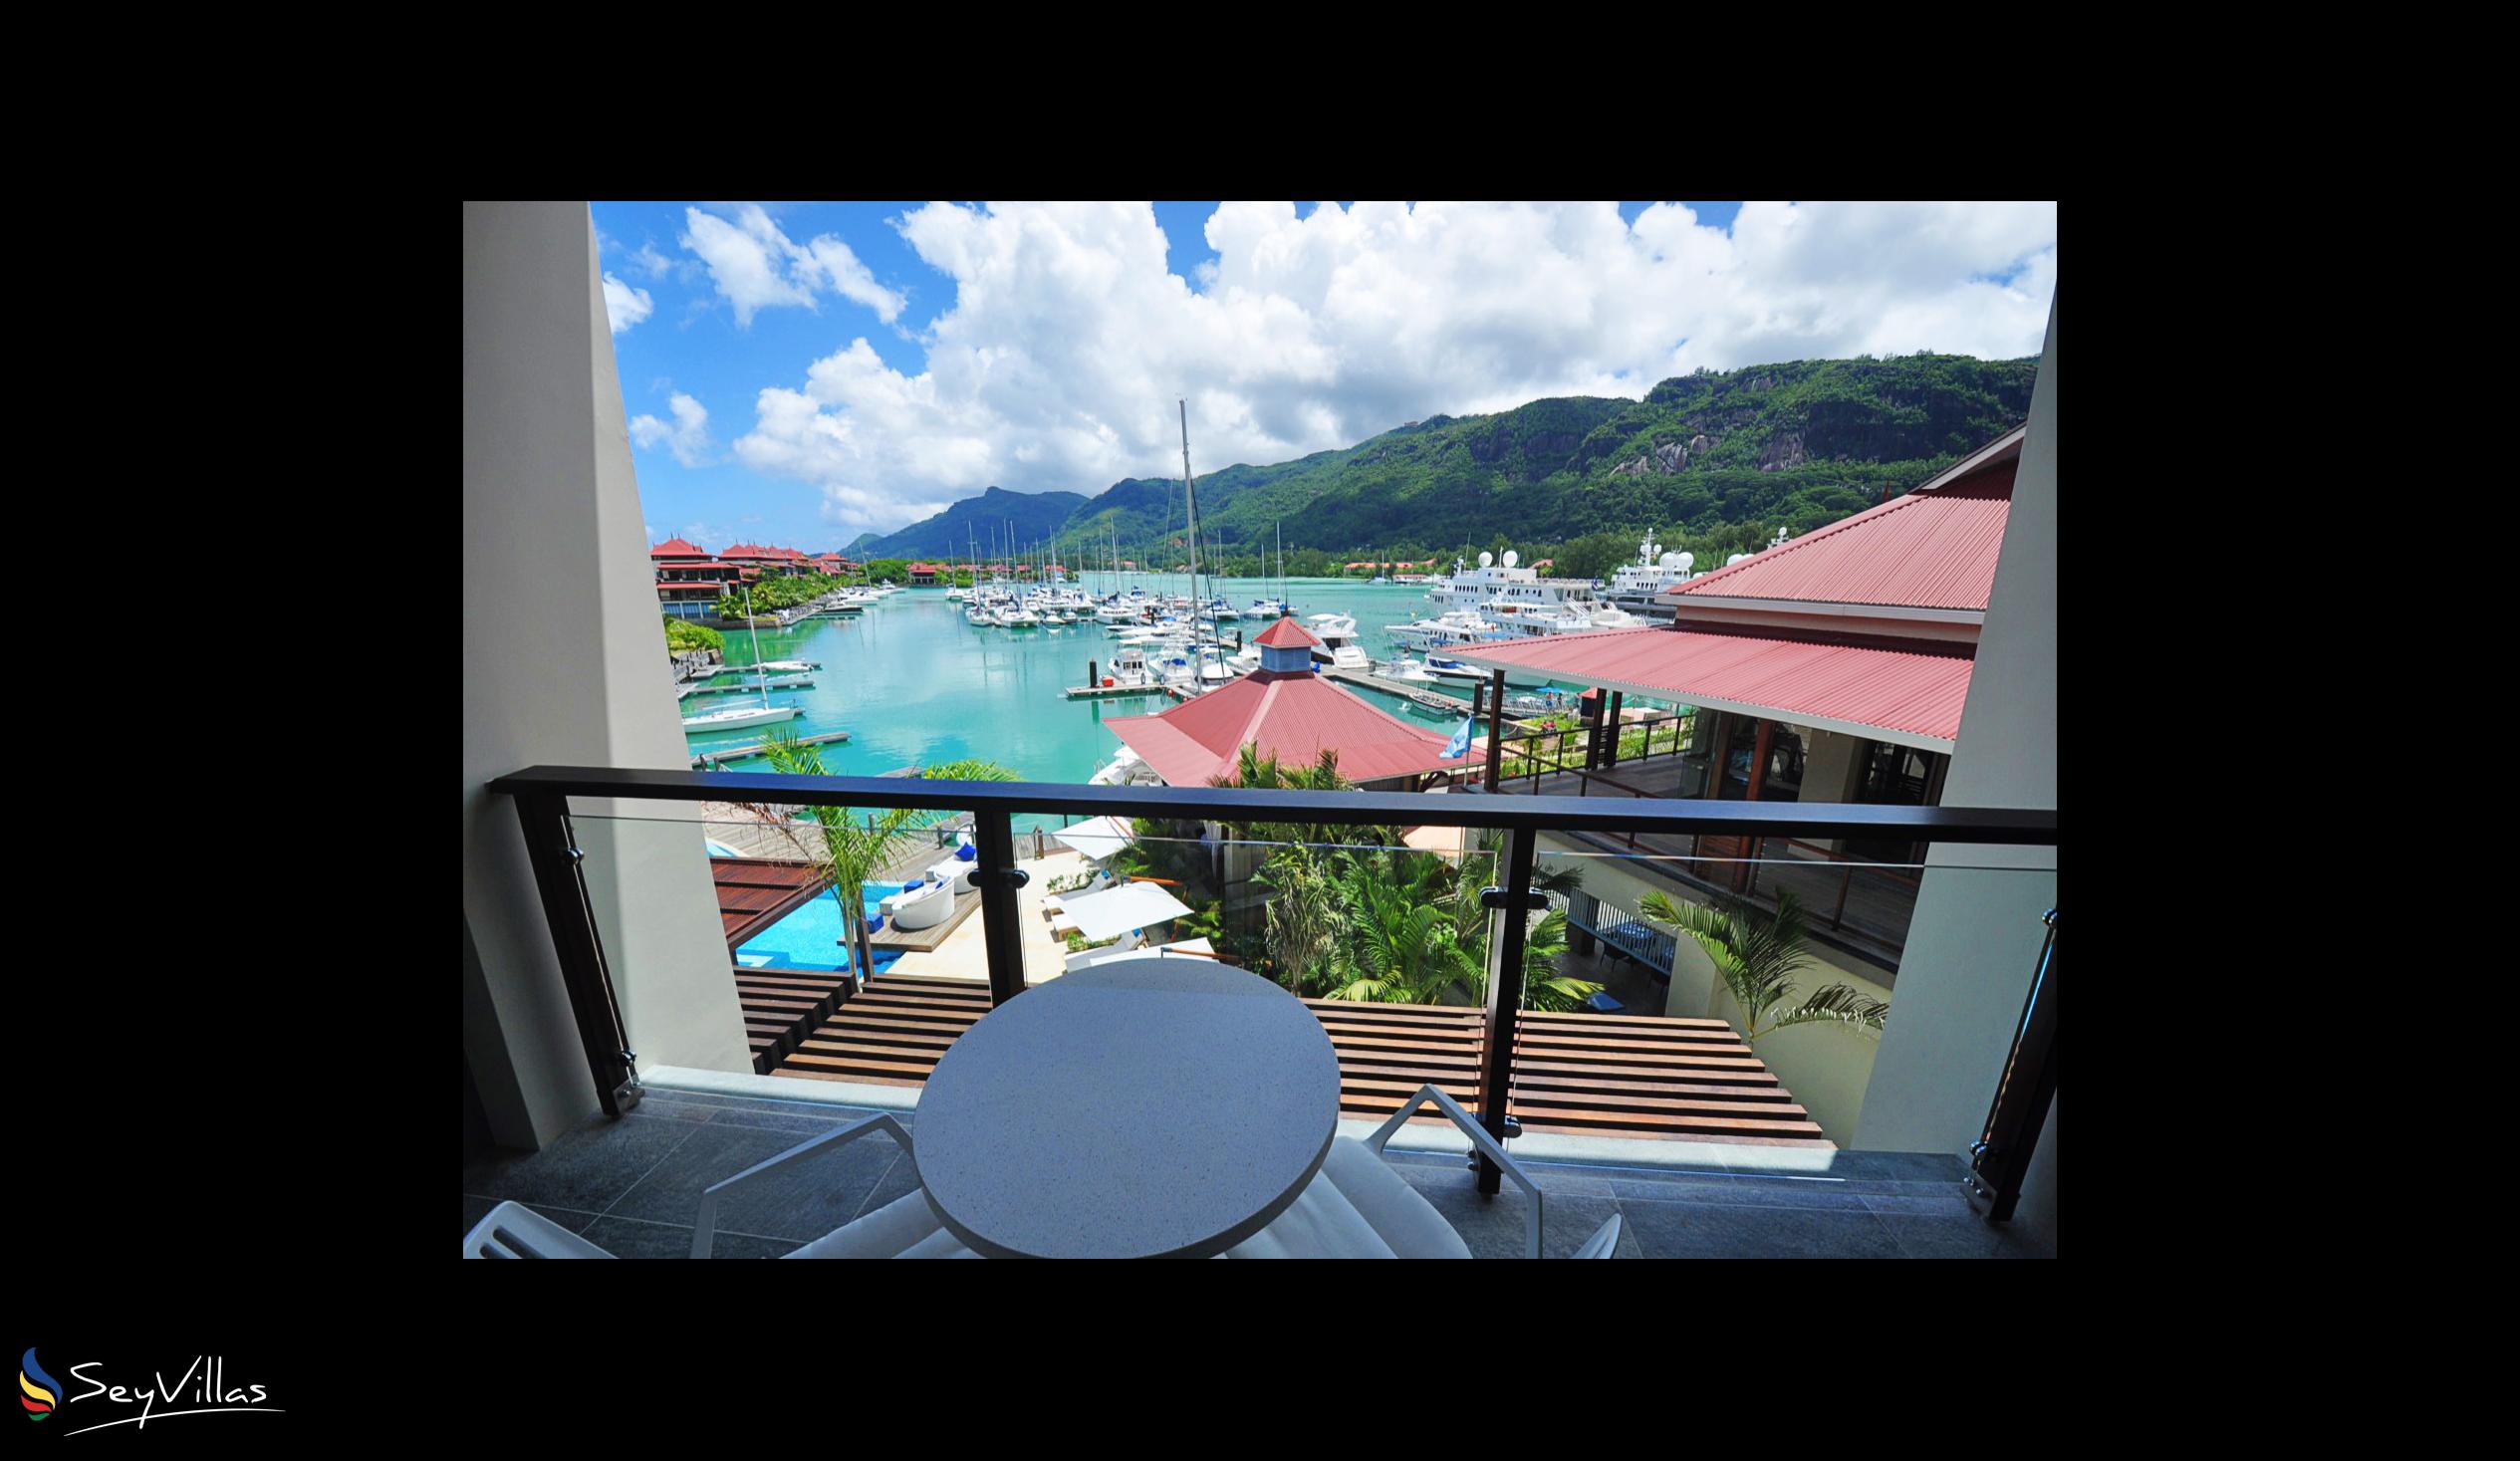 Foto 37: Eden Bleu Hotel - Chambre Deluxe Vue sur la Marina - Mahé (Seychelles)